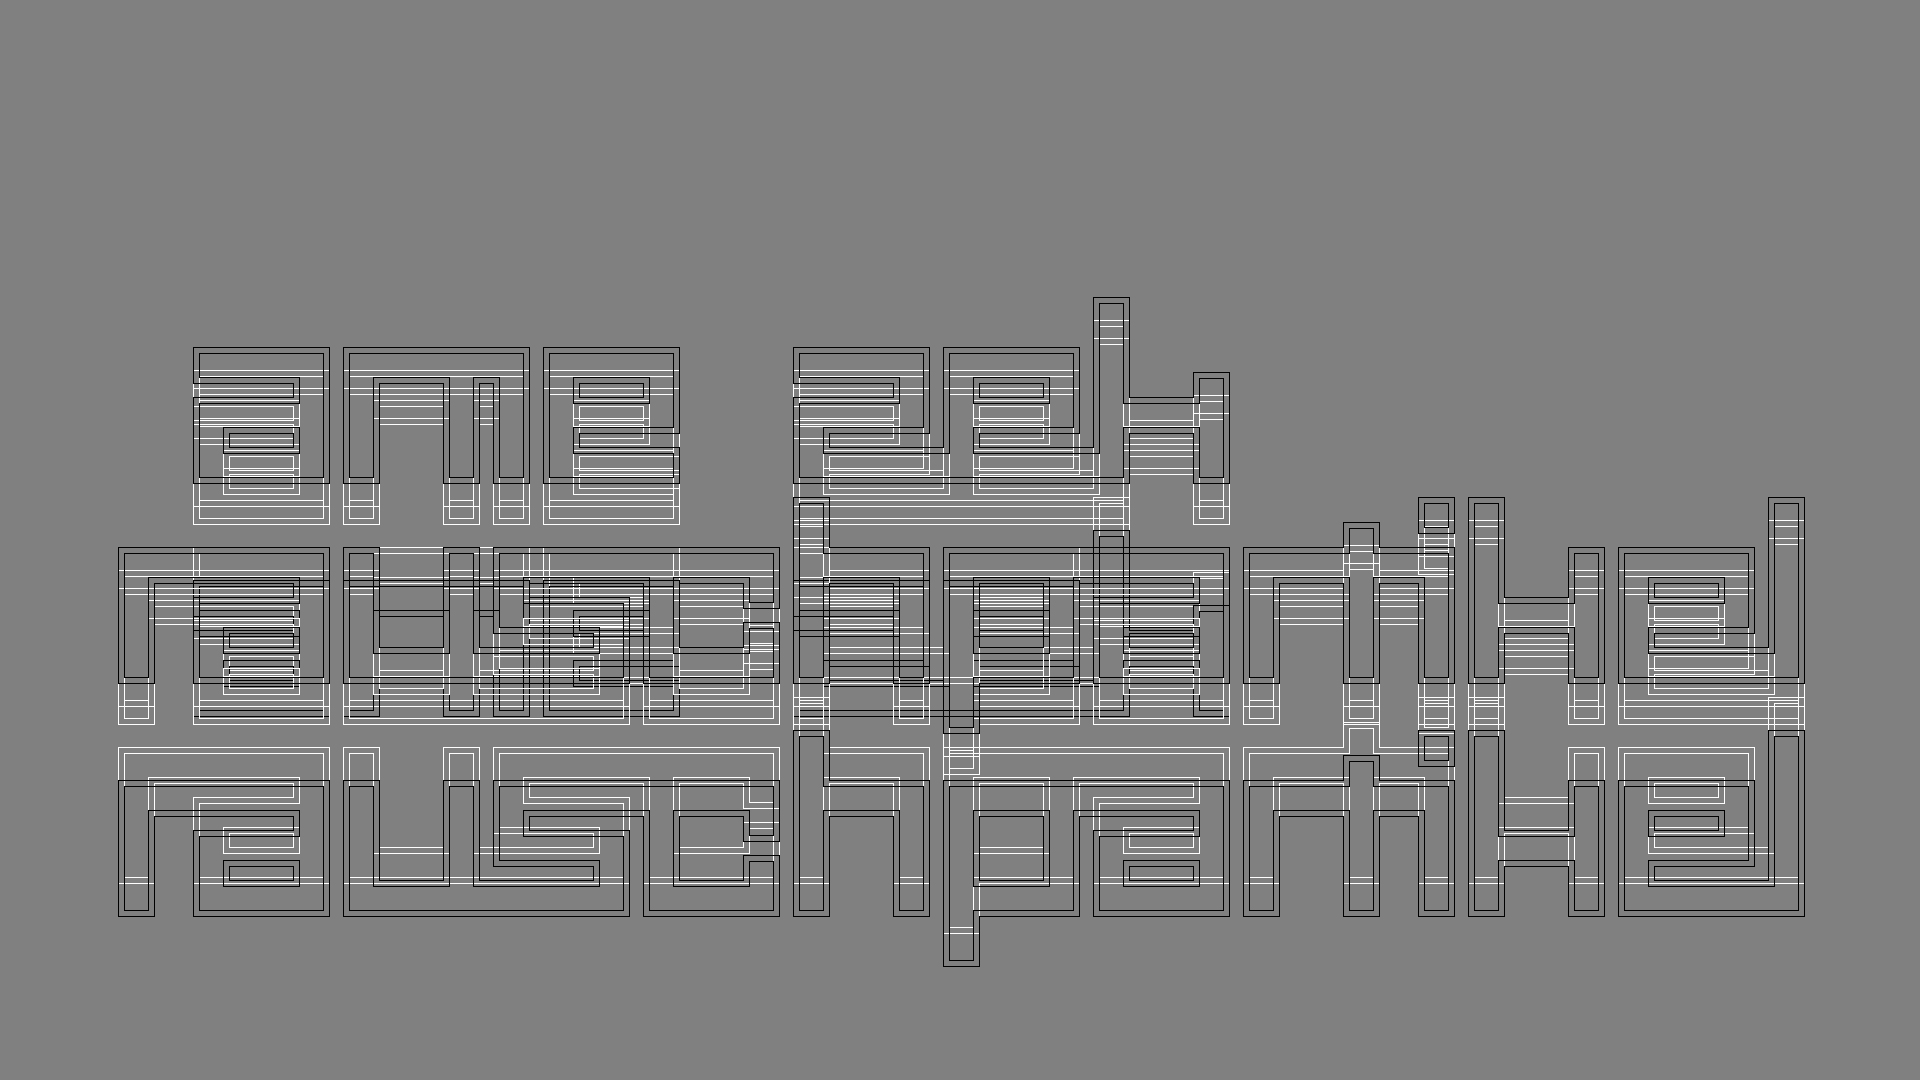 2021-04-19 Ame Zek - rauschpartikel (Vocoder Remixe) (Mixe, Typo Grafik)